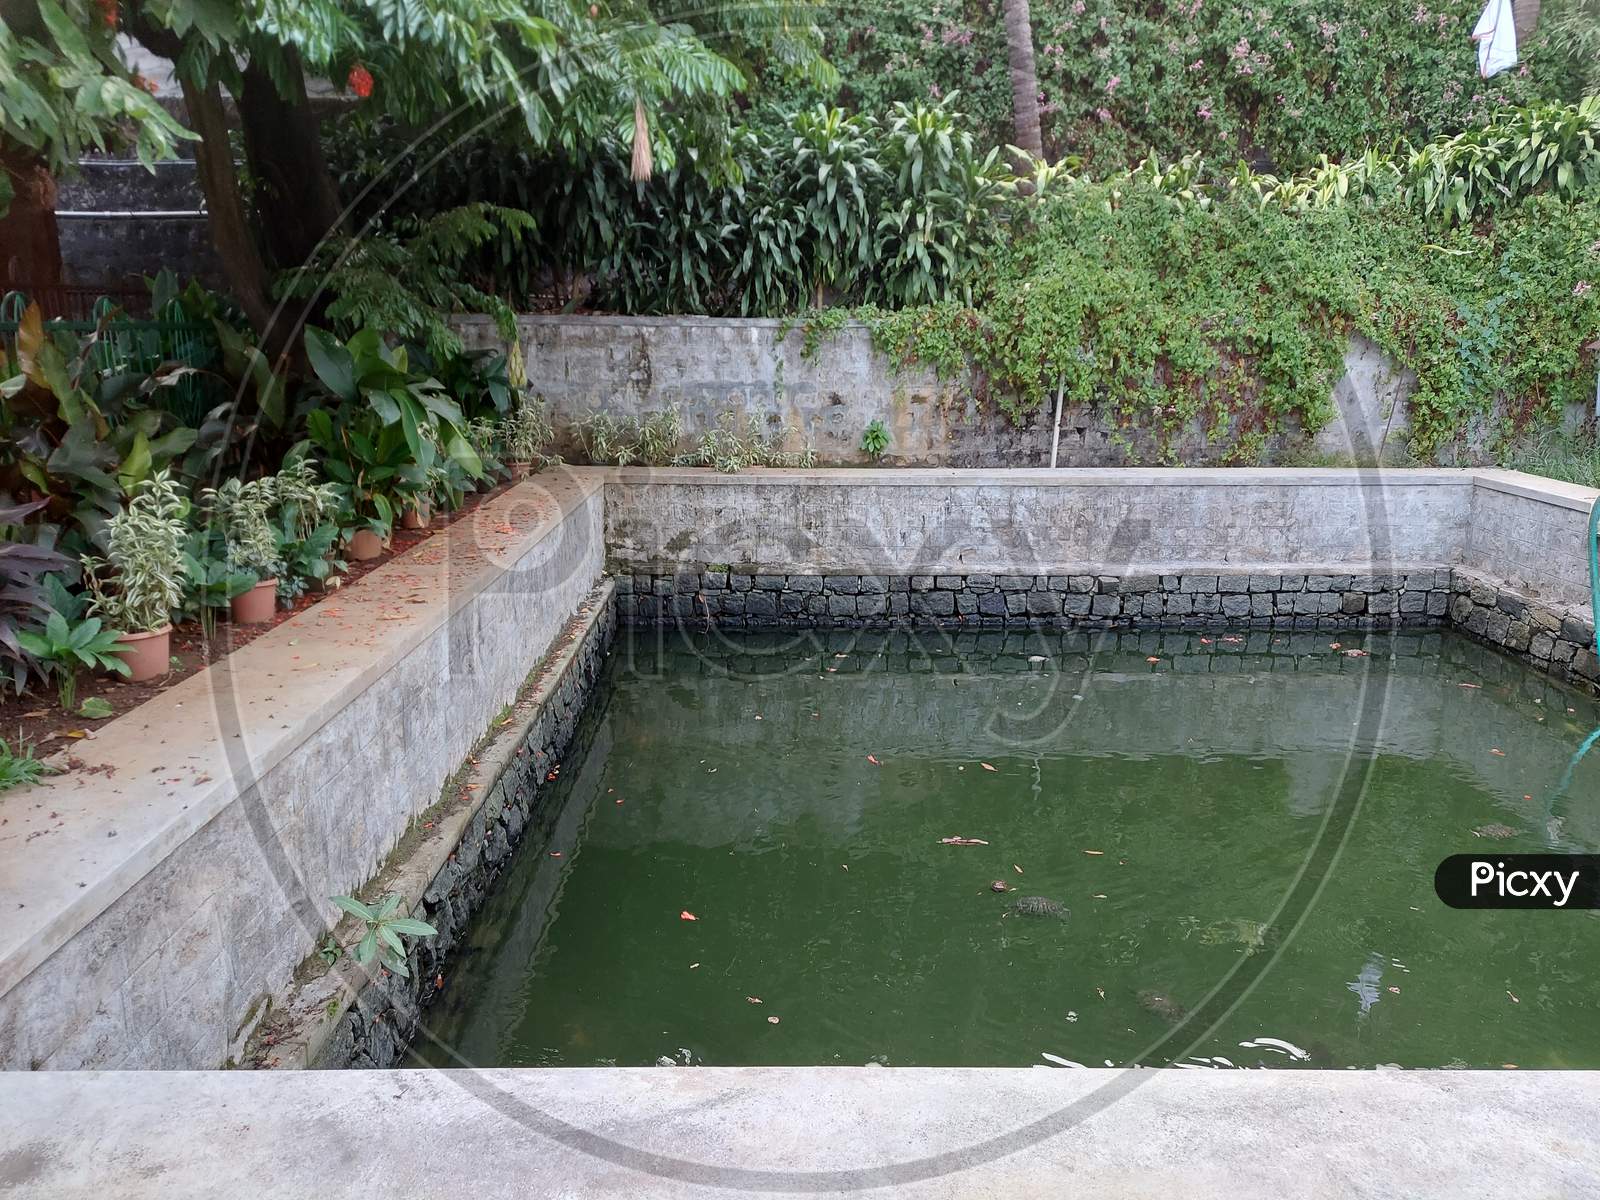 Garden Pond surrounded with green plants and trees, near daramasthala temple, Karnataka, India